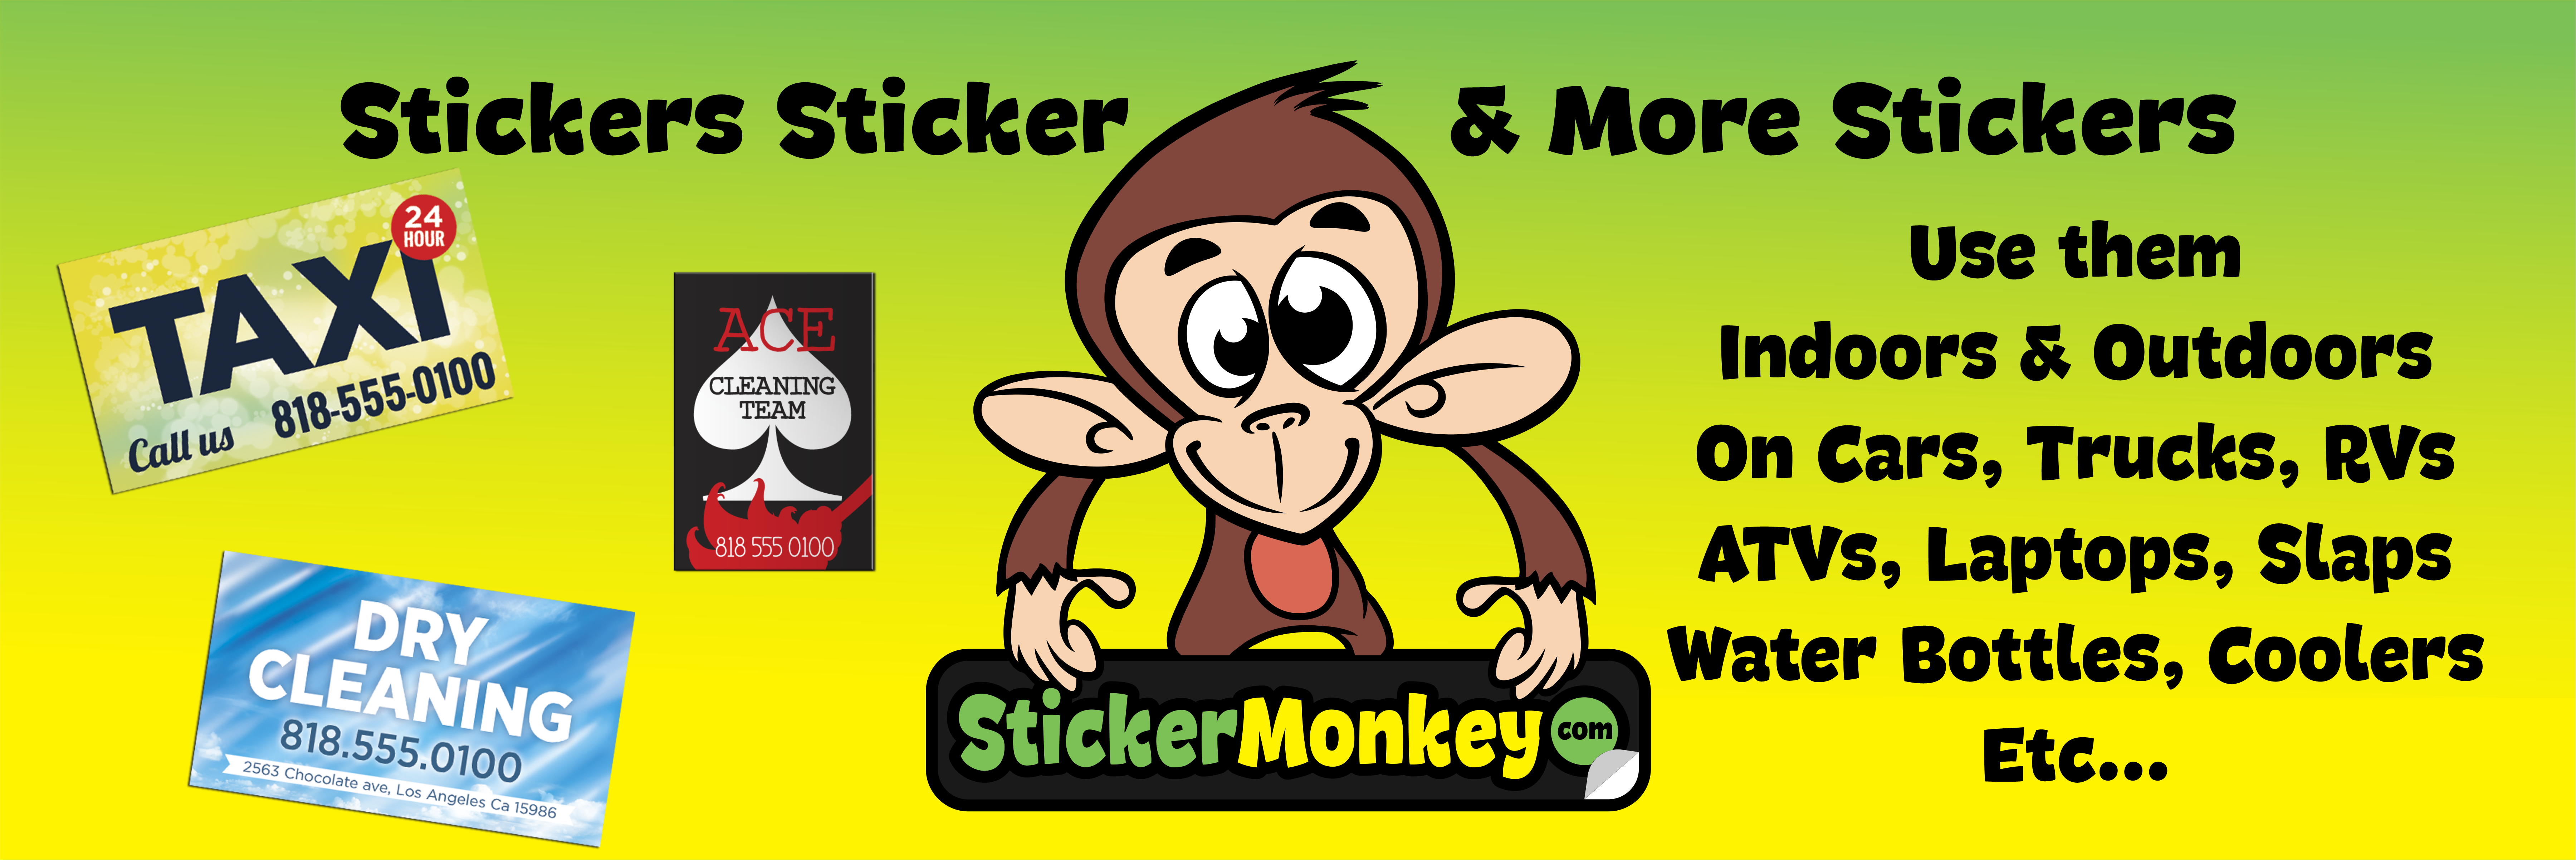 Sticker Factory - Cheeky Monkey Toys